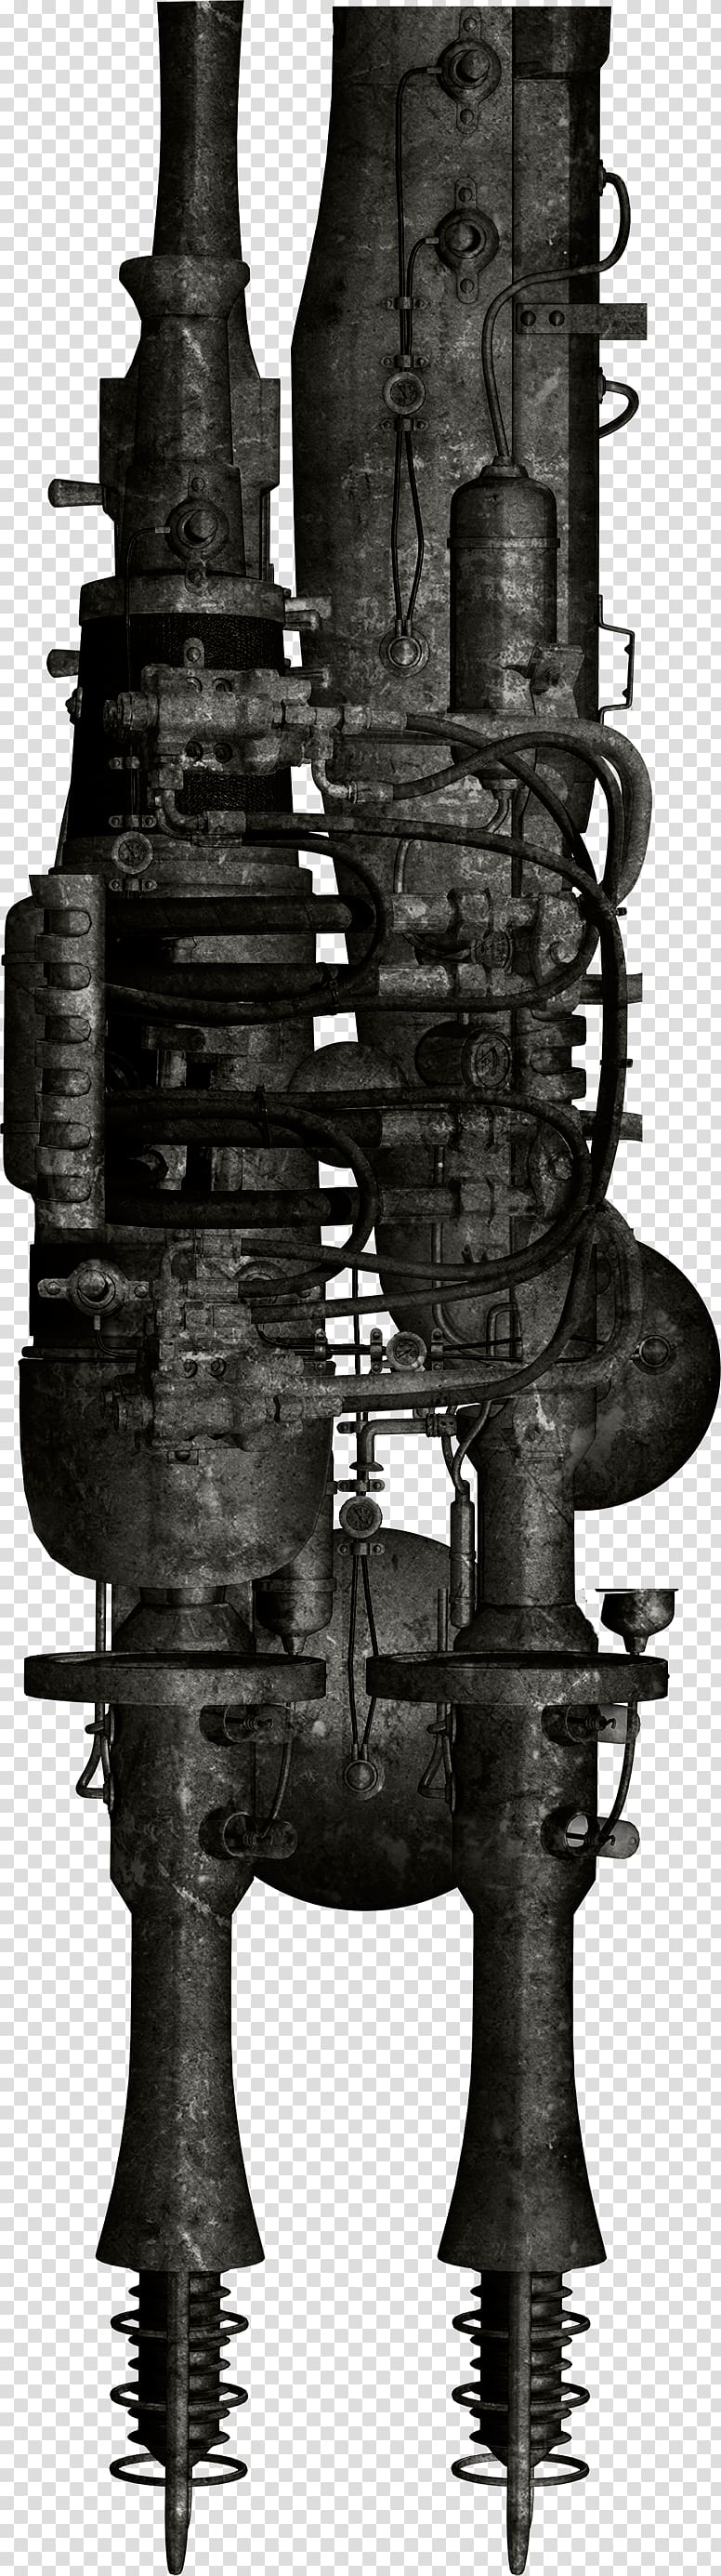 Industrial Revolution Steam engine Steampunk Machine Industry, Diablo Machinery Industrial Revolution steampunk steam engine transparent background PNG clipart